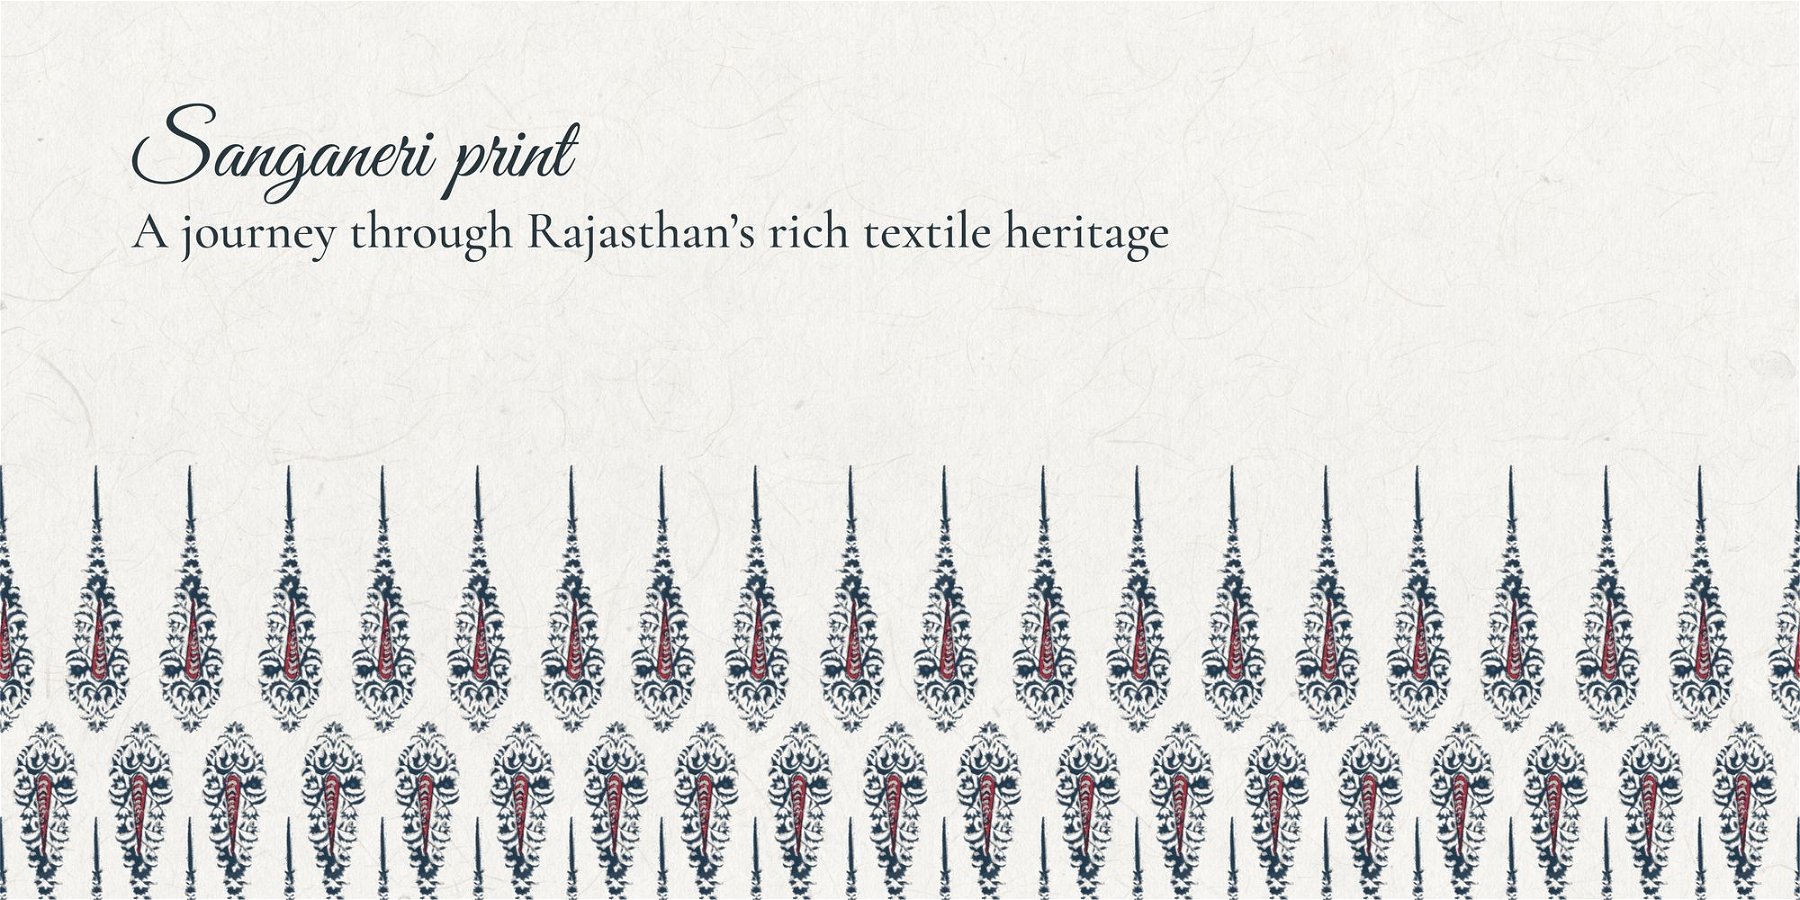 Sanganer print: A journey through Rajasthan’s rich textile heritage